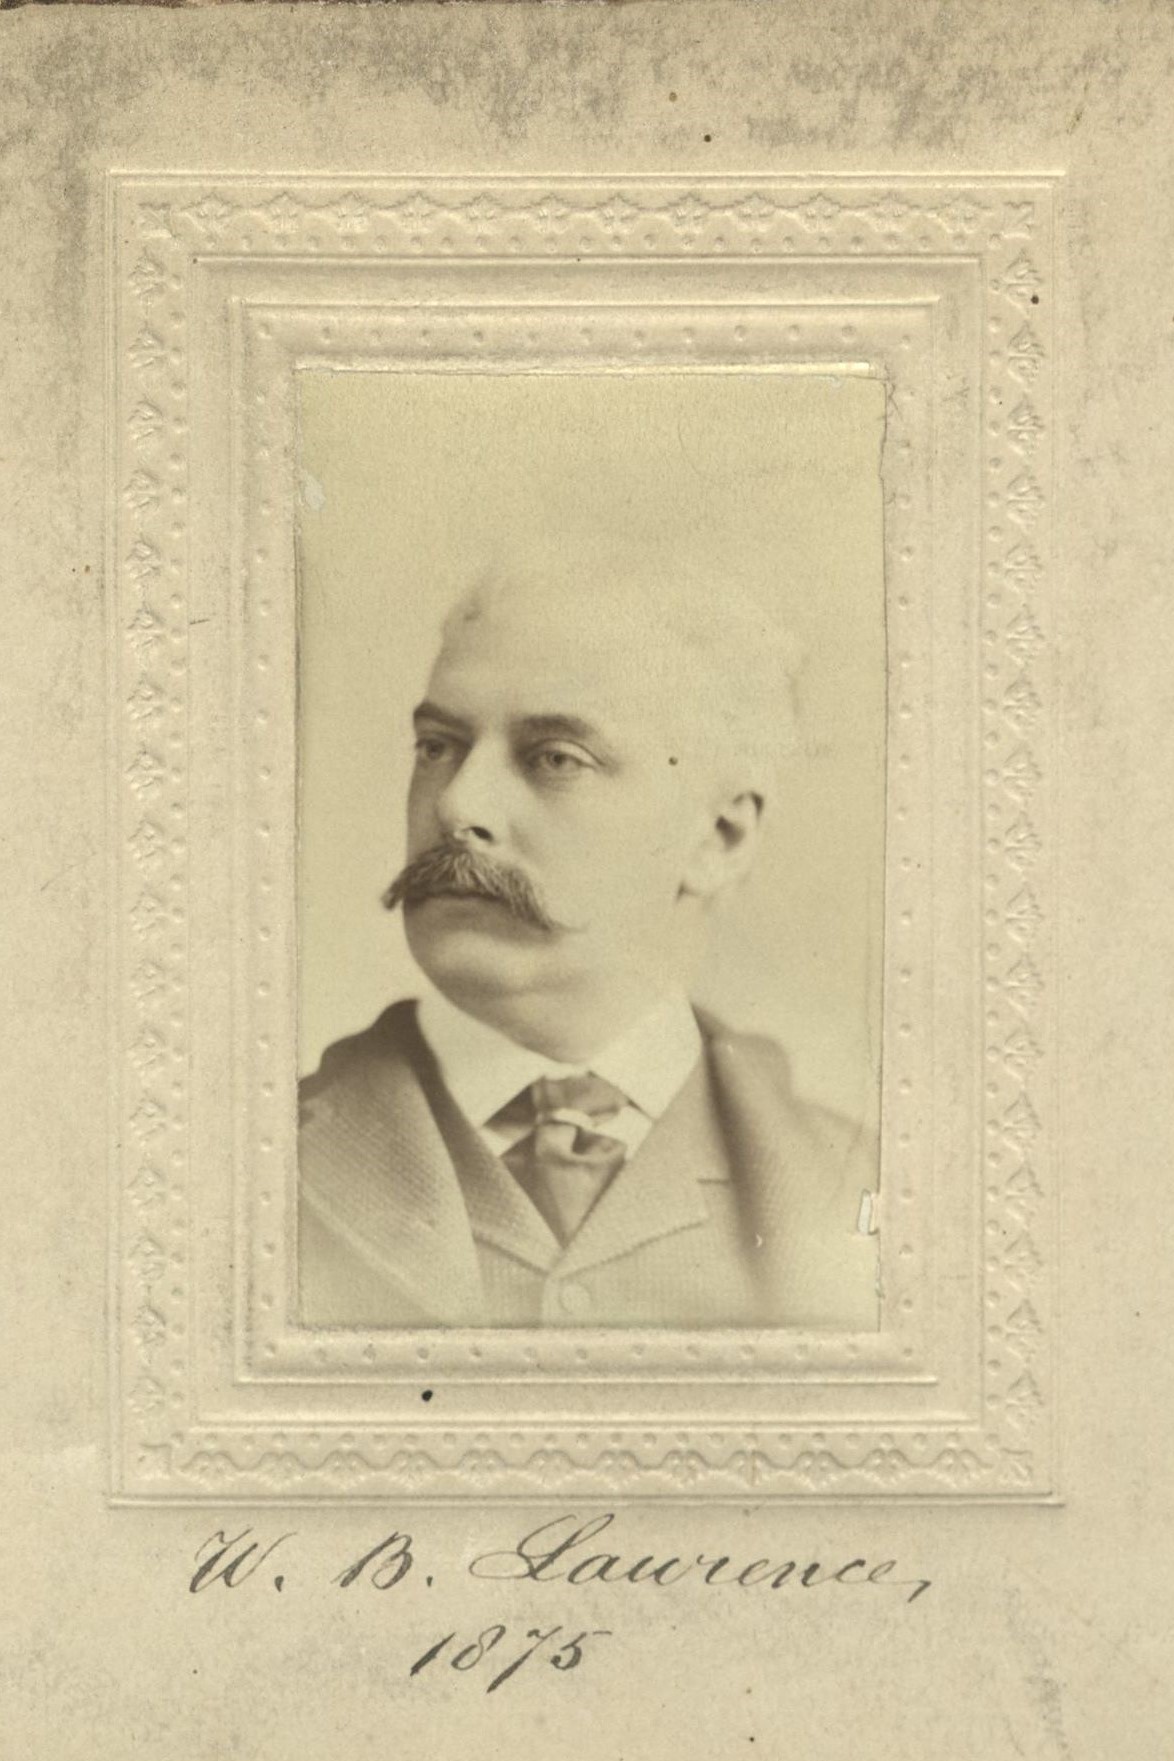 Member portrait of William Betts Lawrence